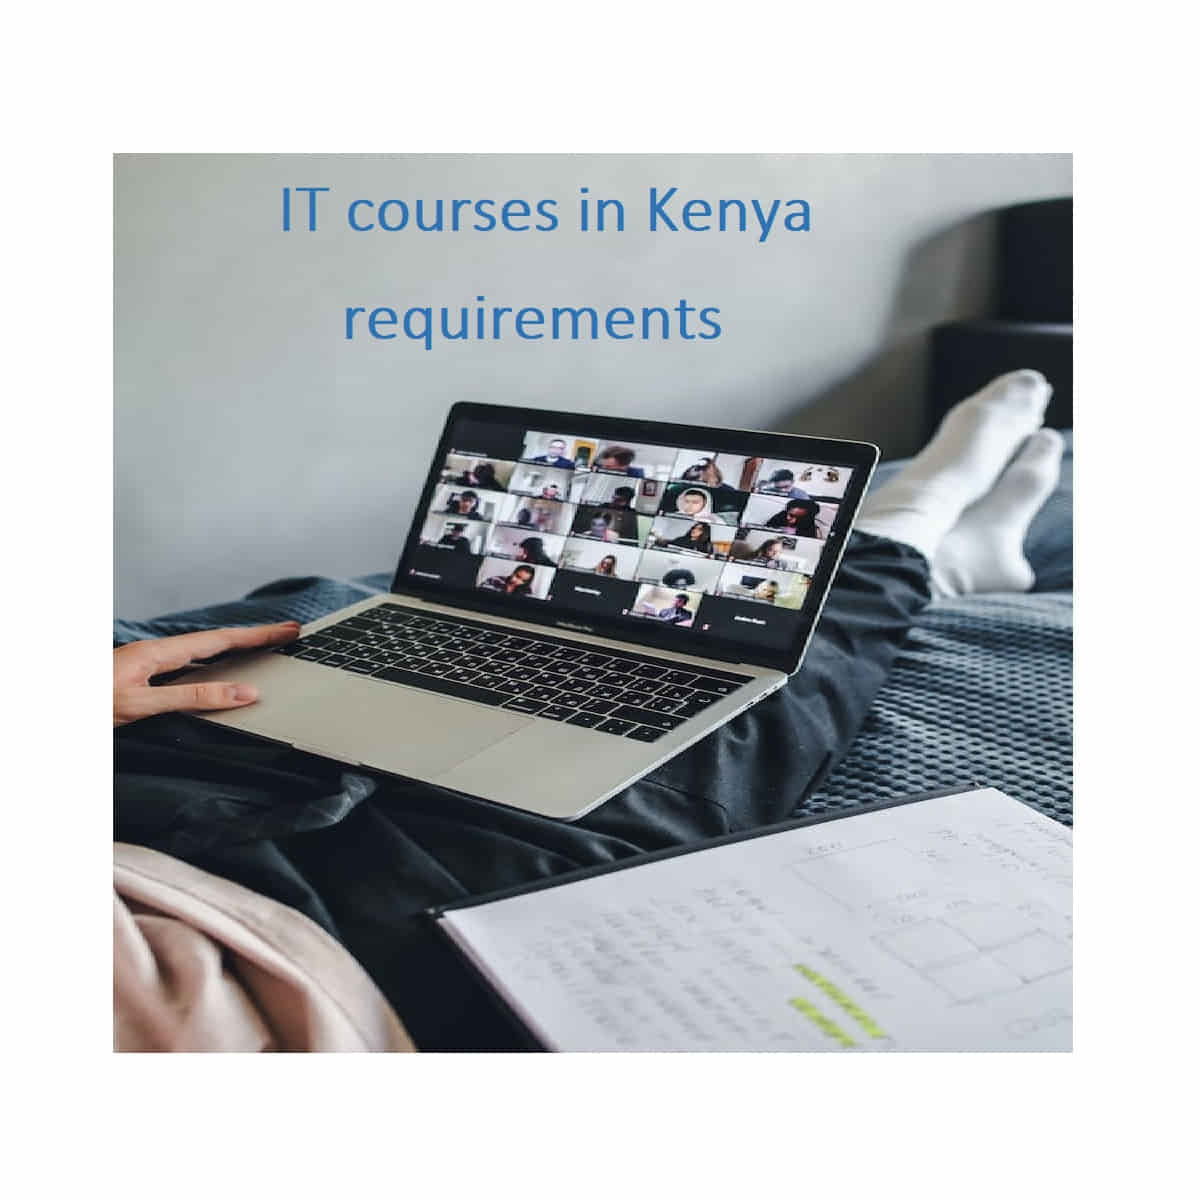 IT courses in Kenya requirements